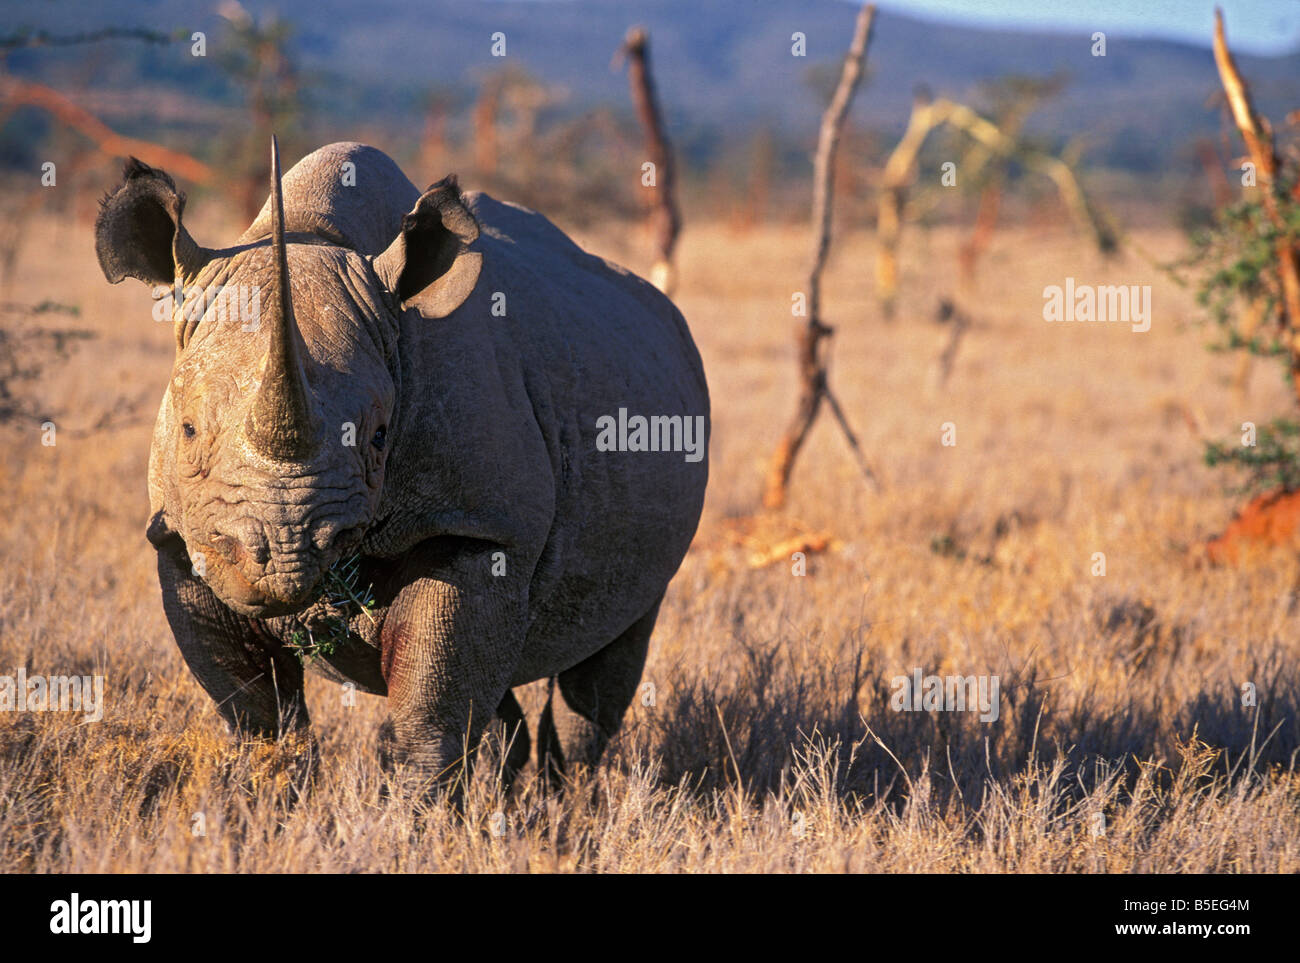 Black Rhino, East Africa, Africa Stock Photo